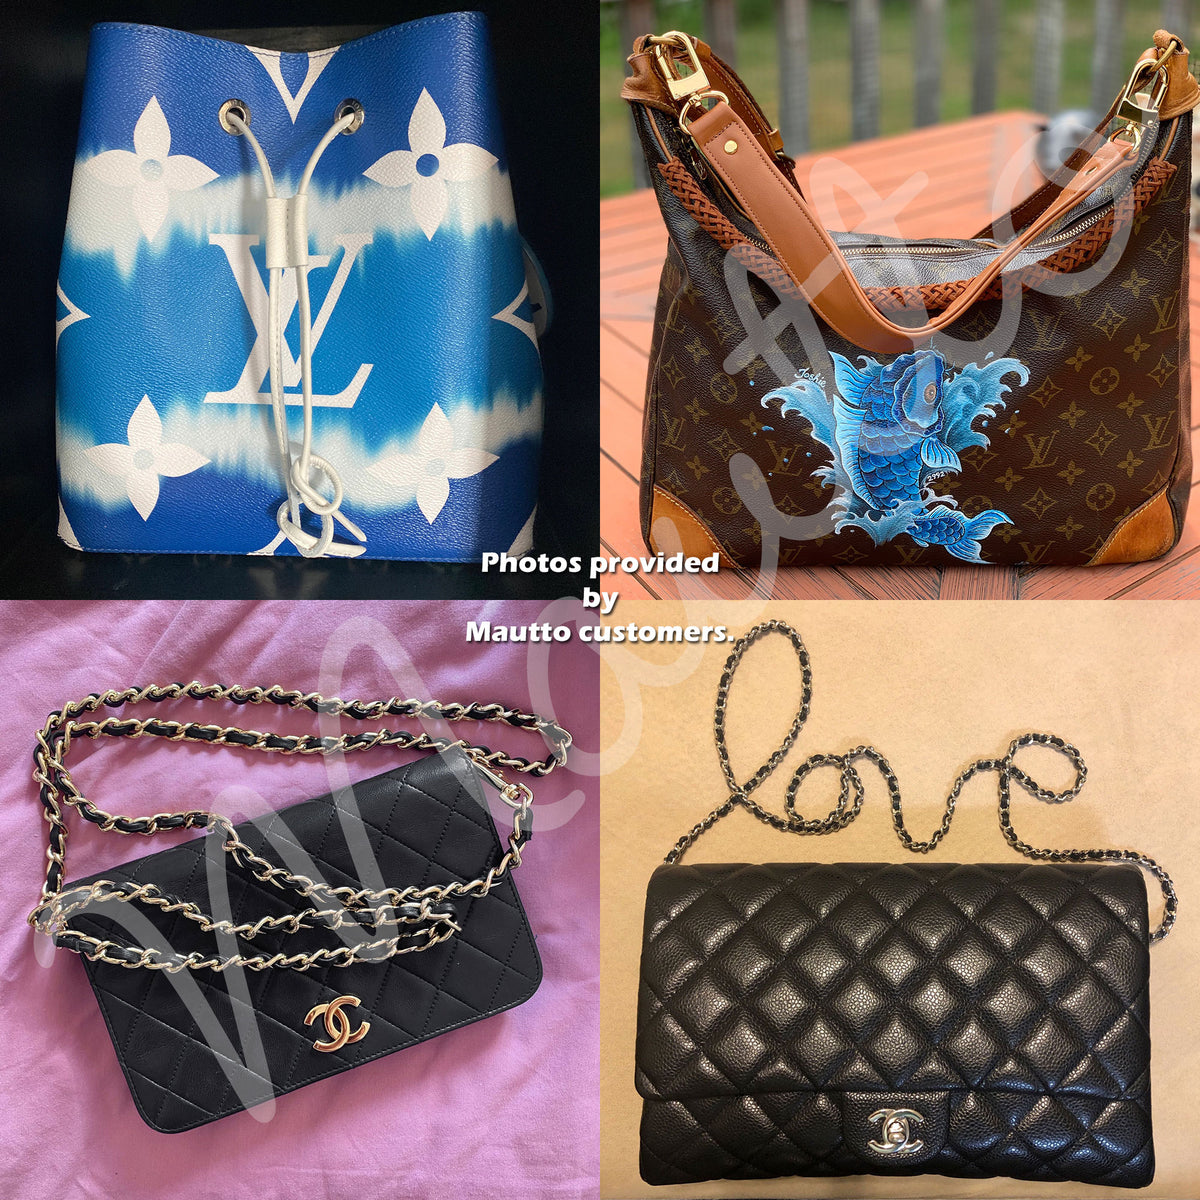 Custom Replacement Straps & Handles for Louis Vuitton (LV) Handbags/Purses/Bags, Replacement Purse Straps & Handbag Accessories - Leather, Chain & more